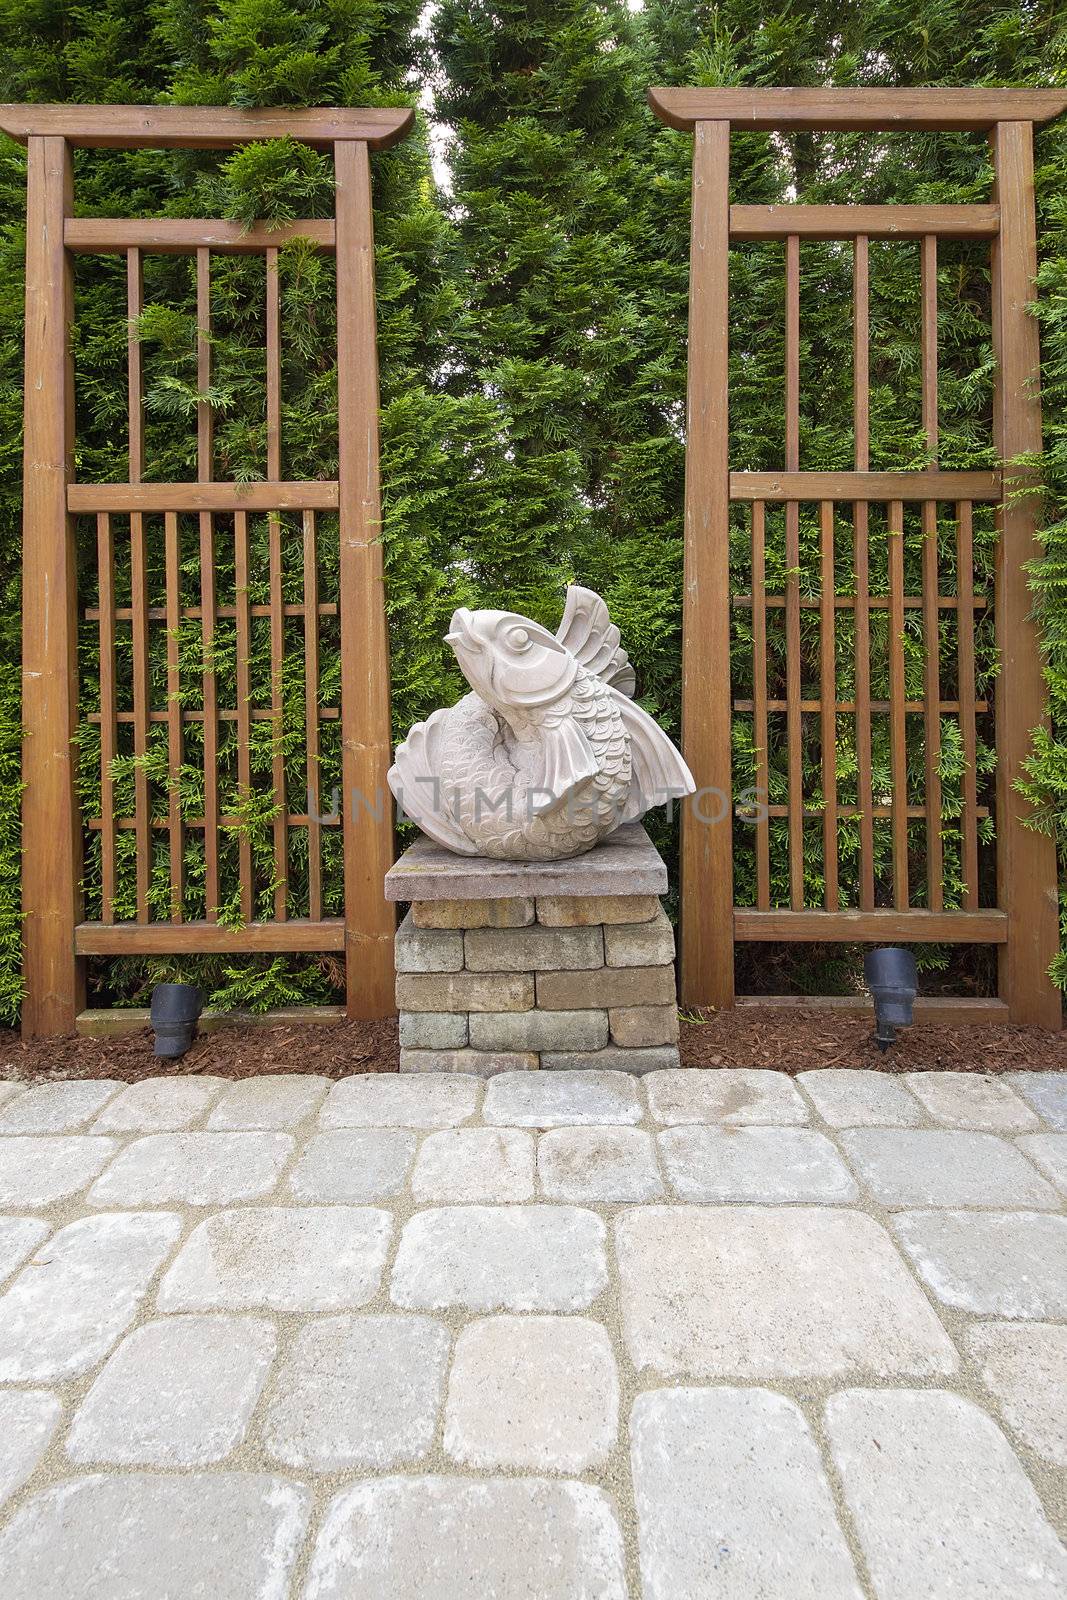 Asian Koi Fish Sculpture in Garden Backyard by jpldesigns